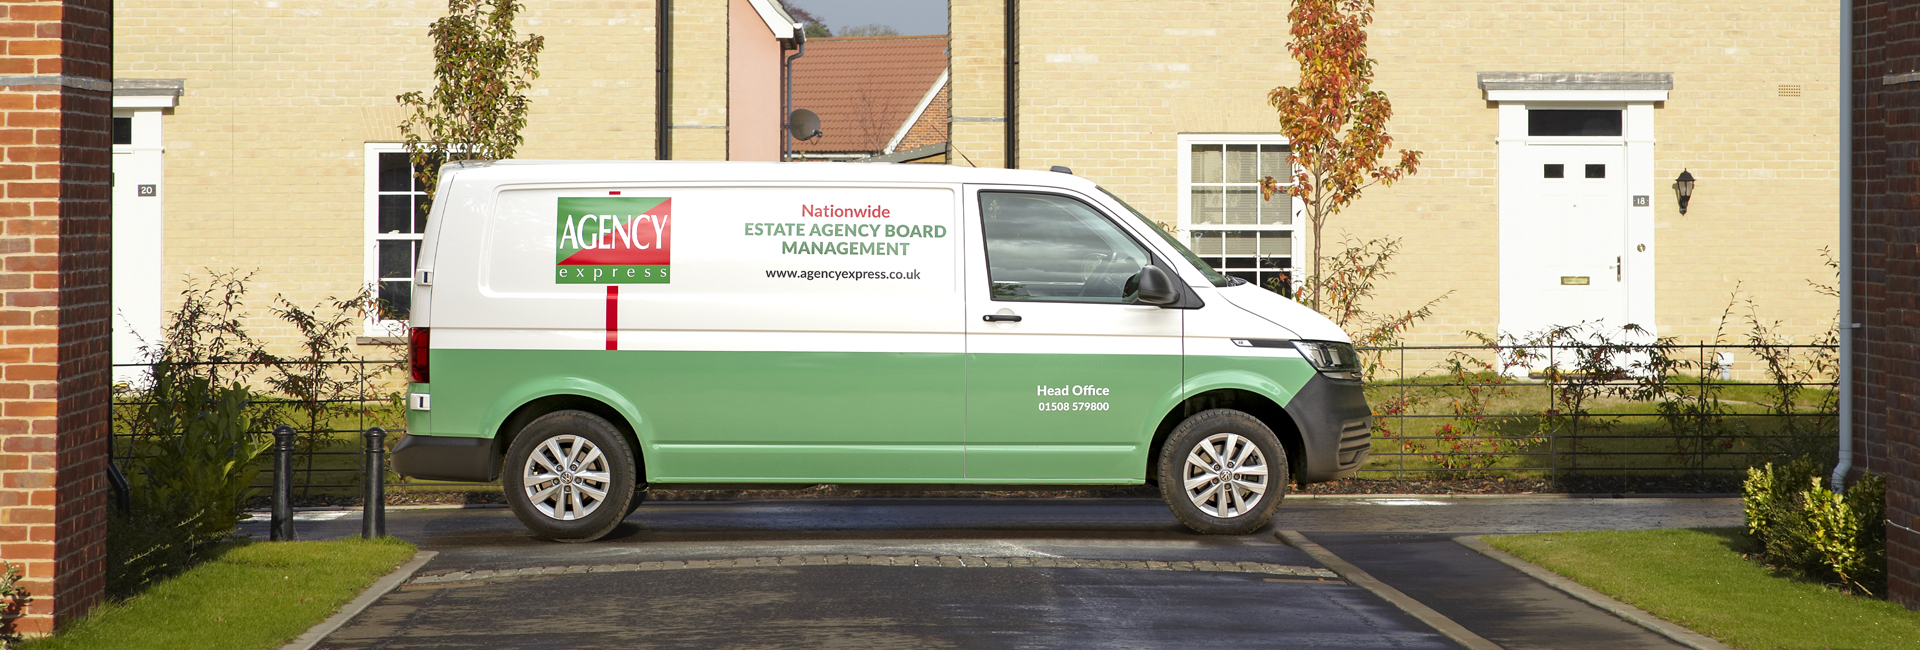 Agency Express estate agency board erector - van and driver